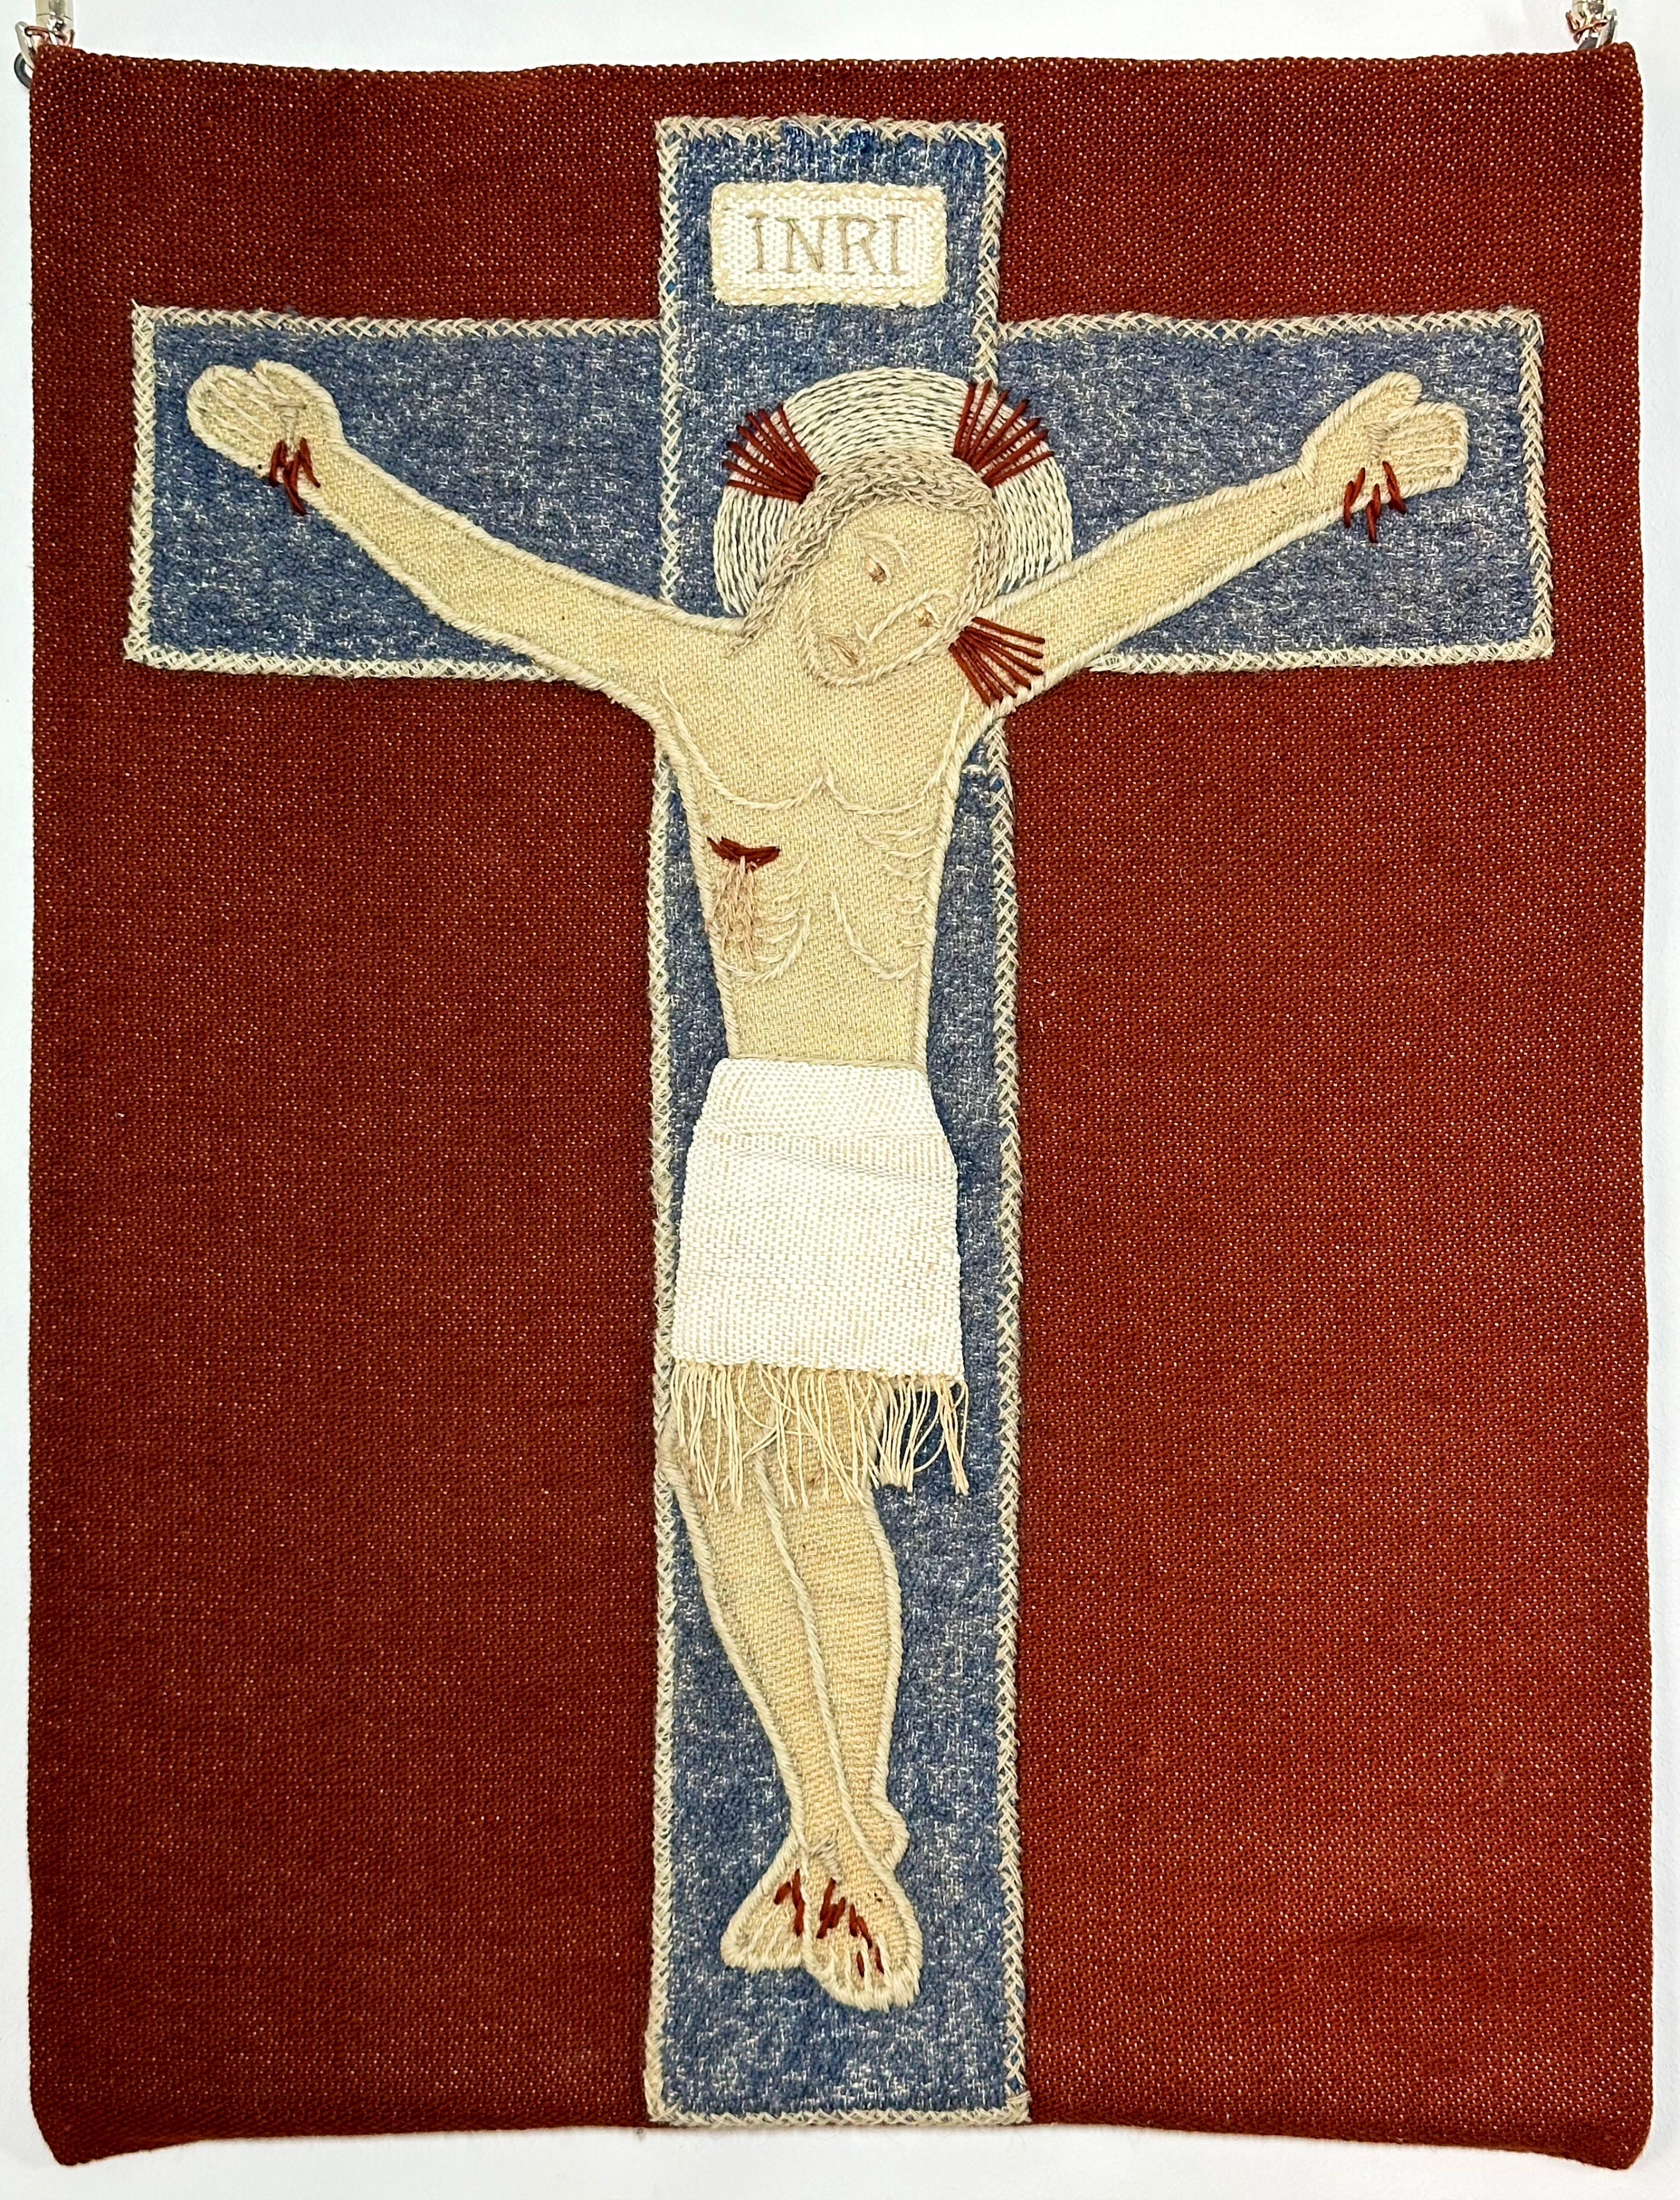 Jesus am Kreuz (Archäologie- und Heimatmuseum Allensbach CC BY-NC-SA)